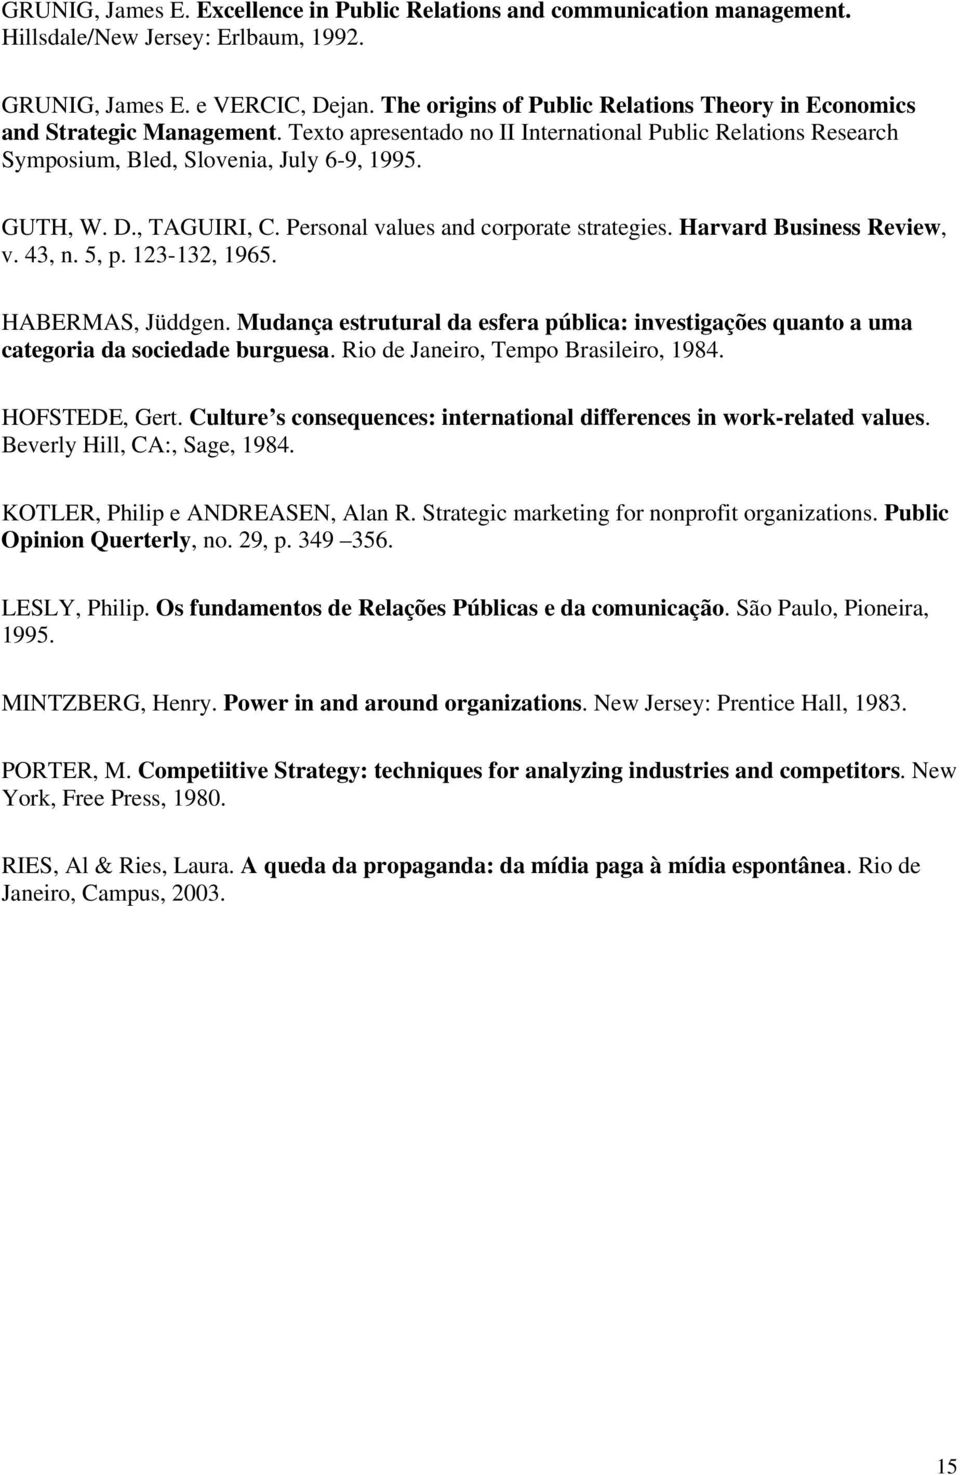 , TAGUIRI, C. Personal values and corporate strategies. Harvard Business Review, v. 43, n. 5, p. 123-132, 1965. HABERMAS, Jüddgen.